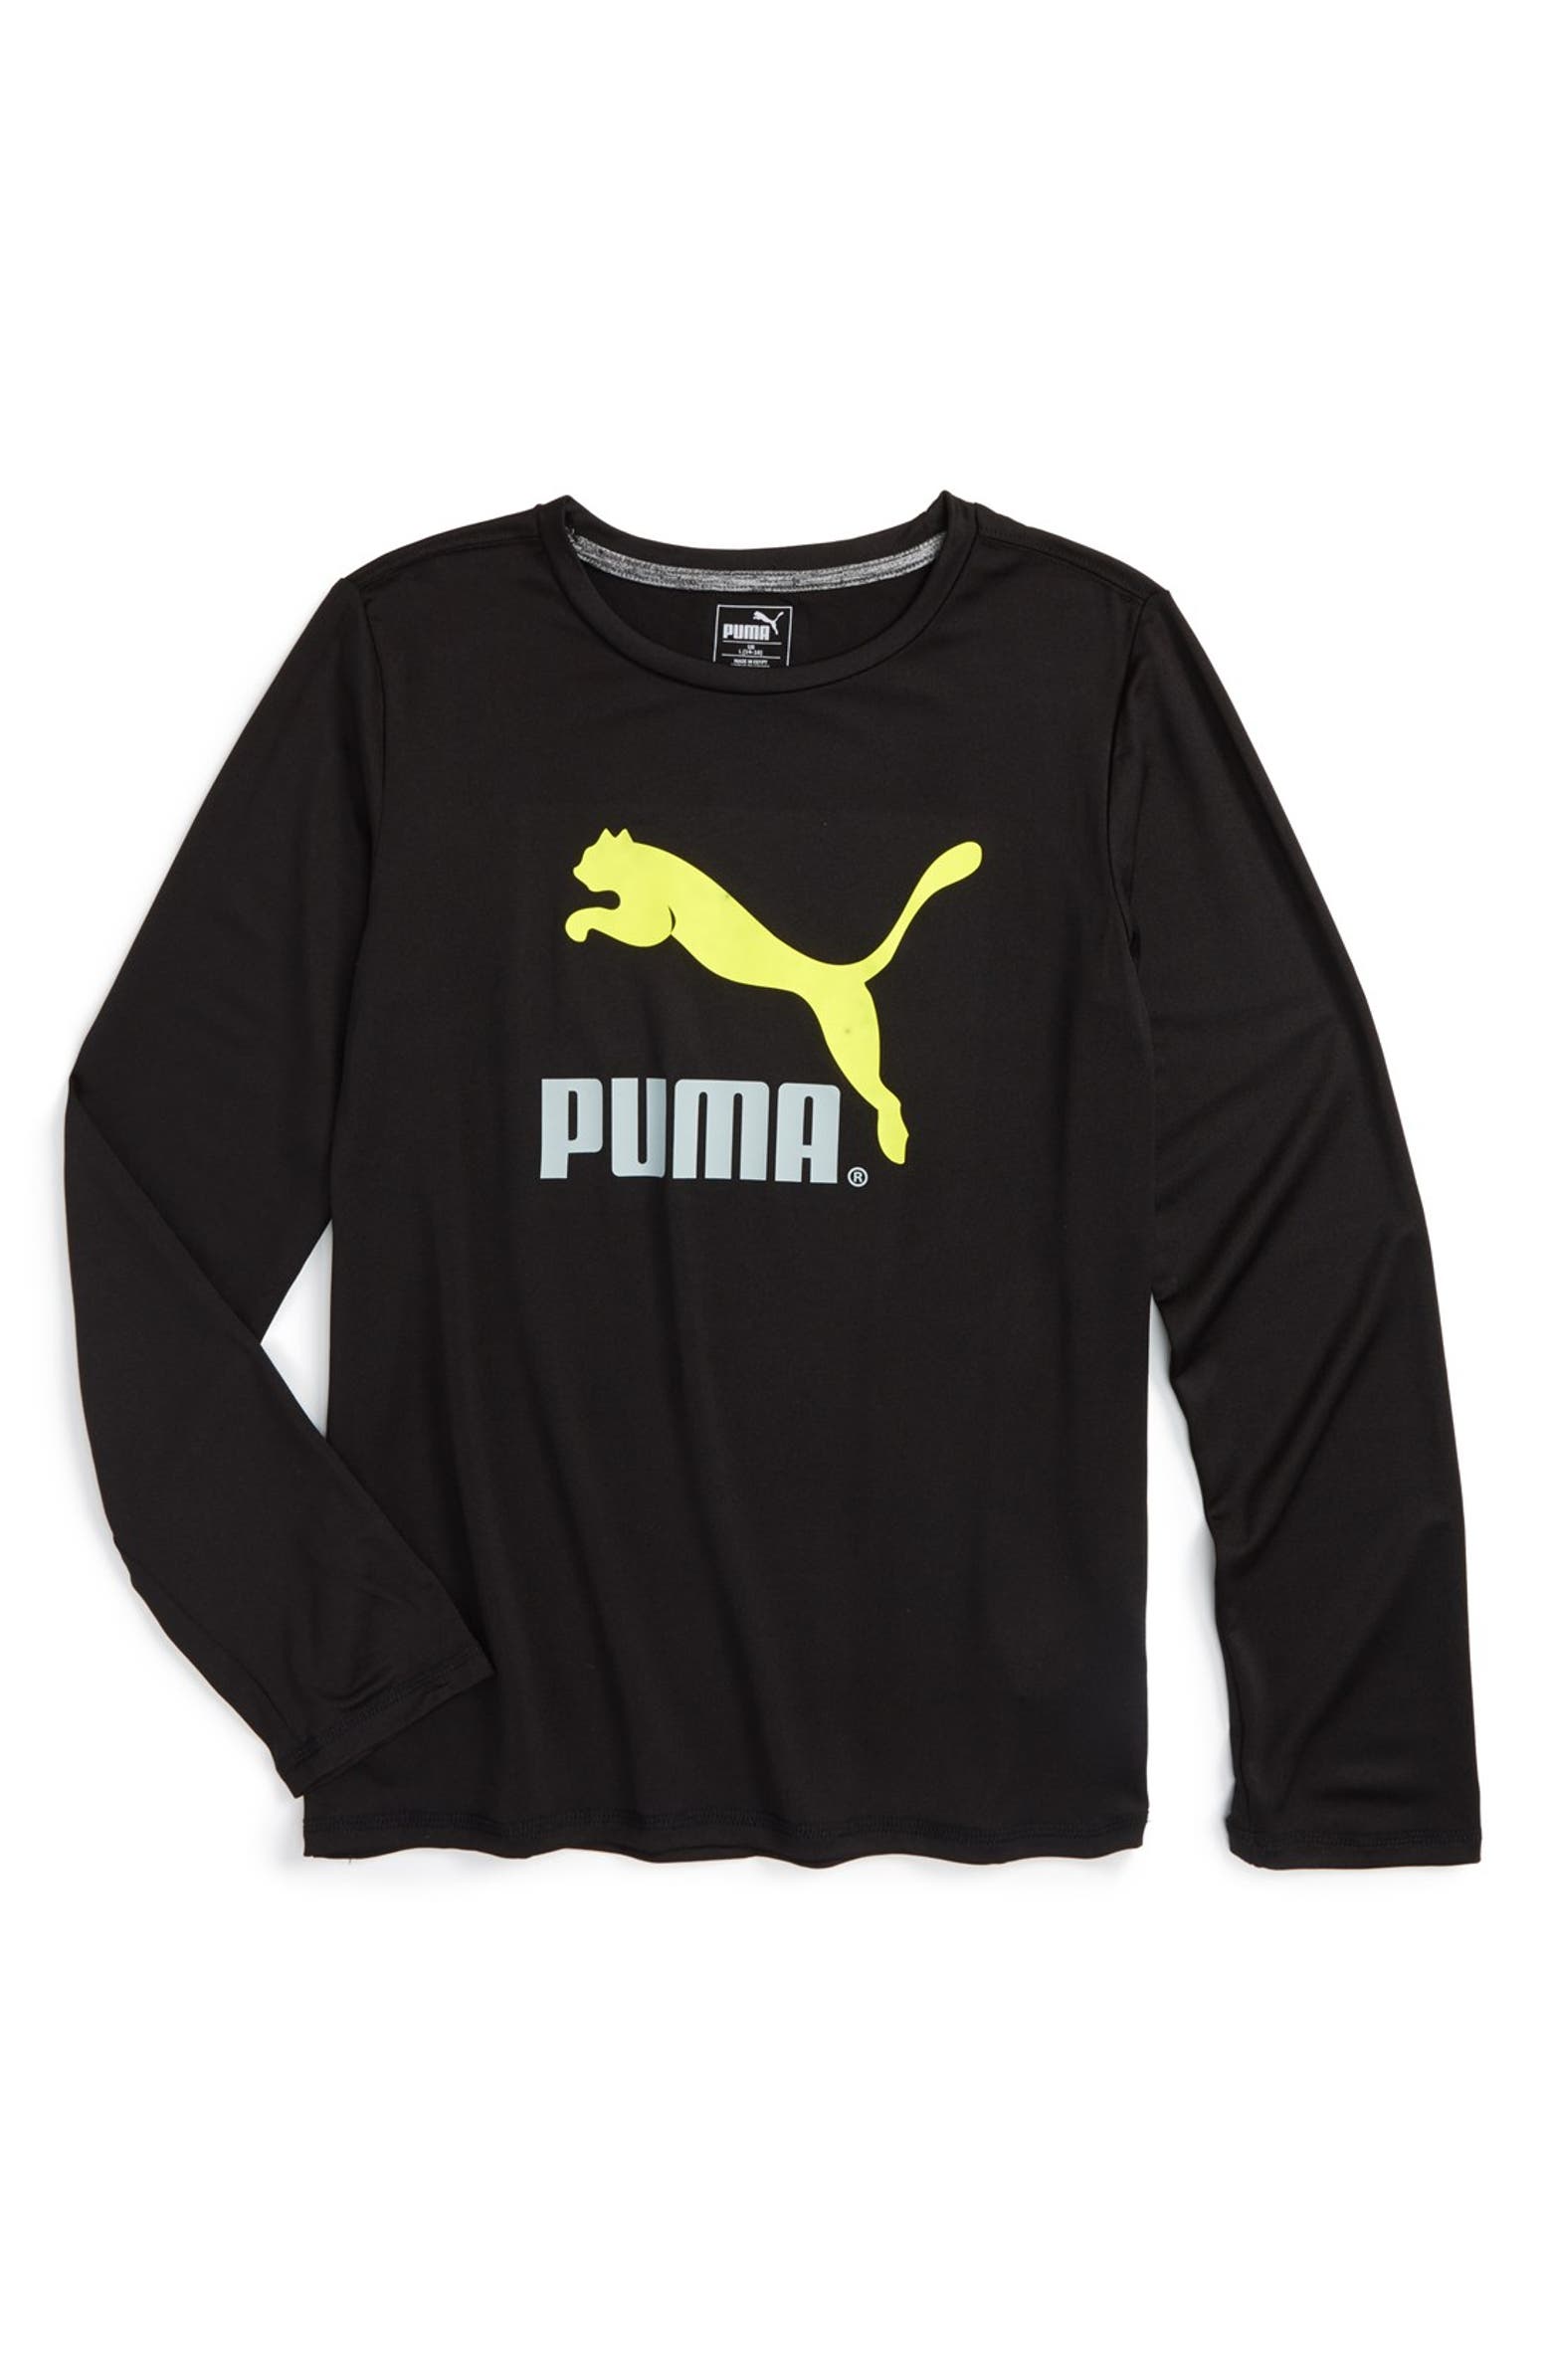 PUMA 'No. 1 Logo' Long Sleeve dryCELL T-Shirt (Little Boys) | Nordstrom